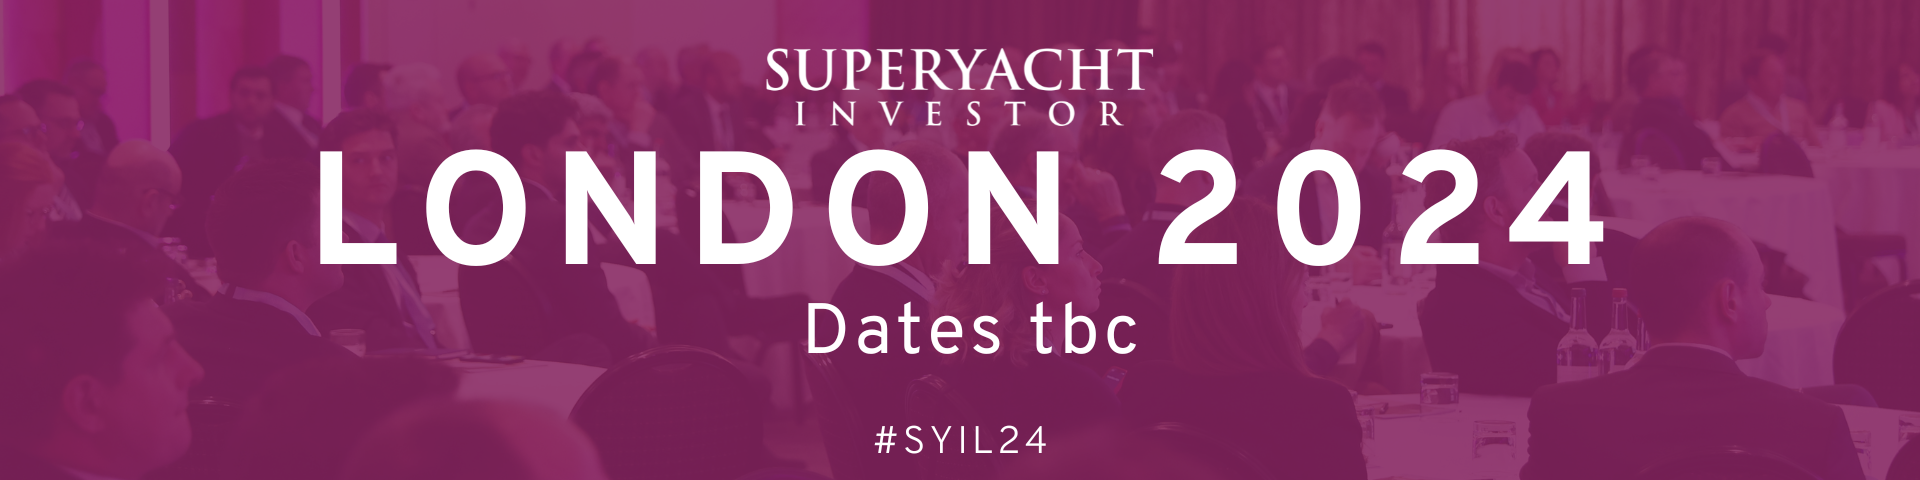 Superyacht Investor London 2024